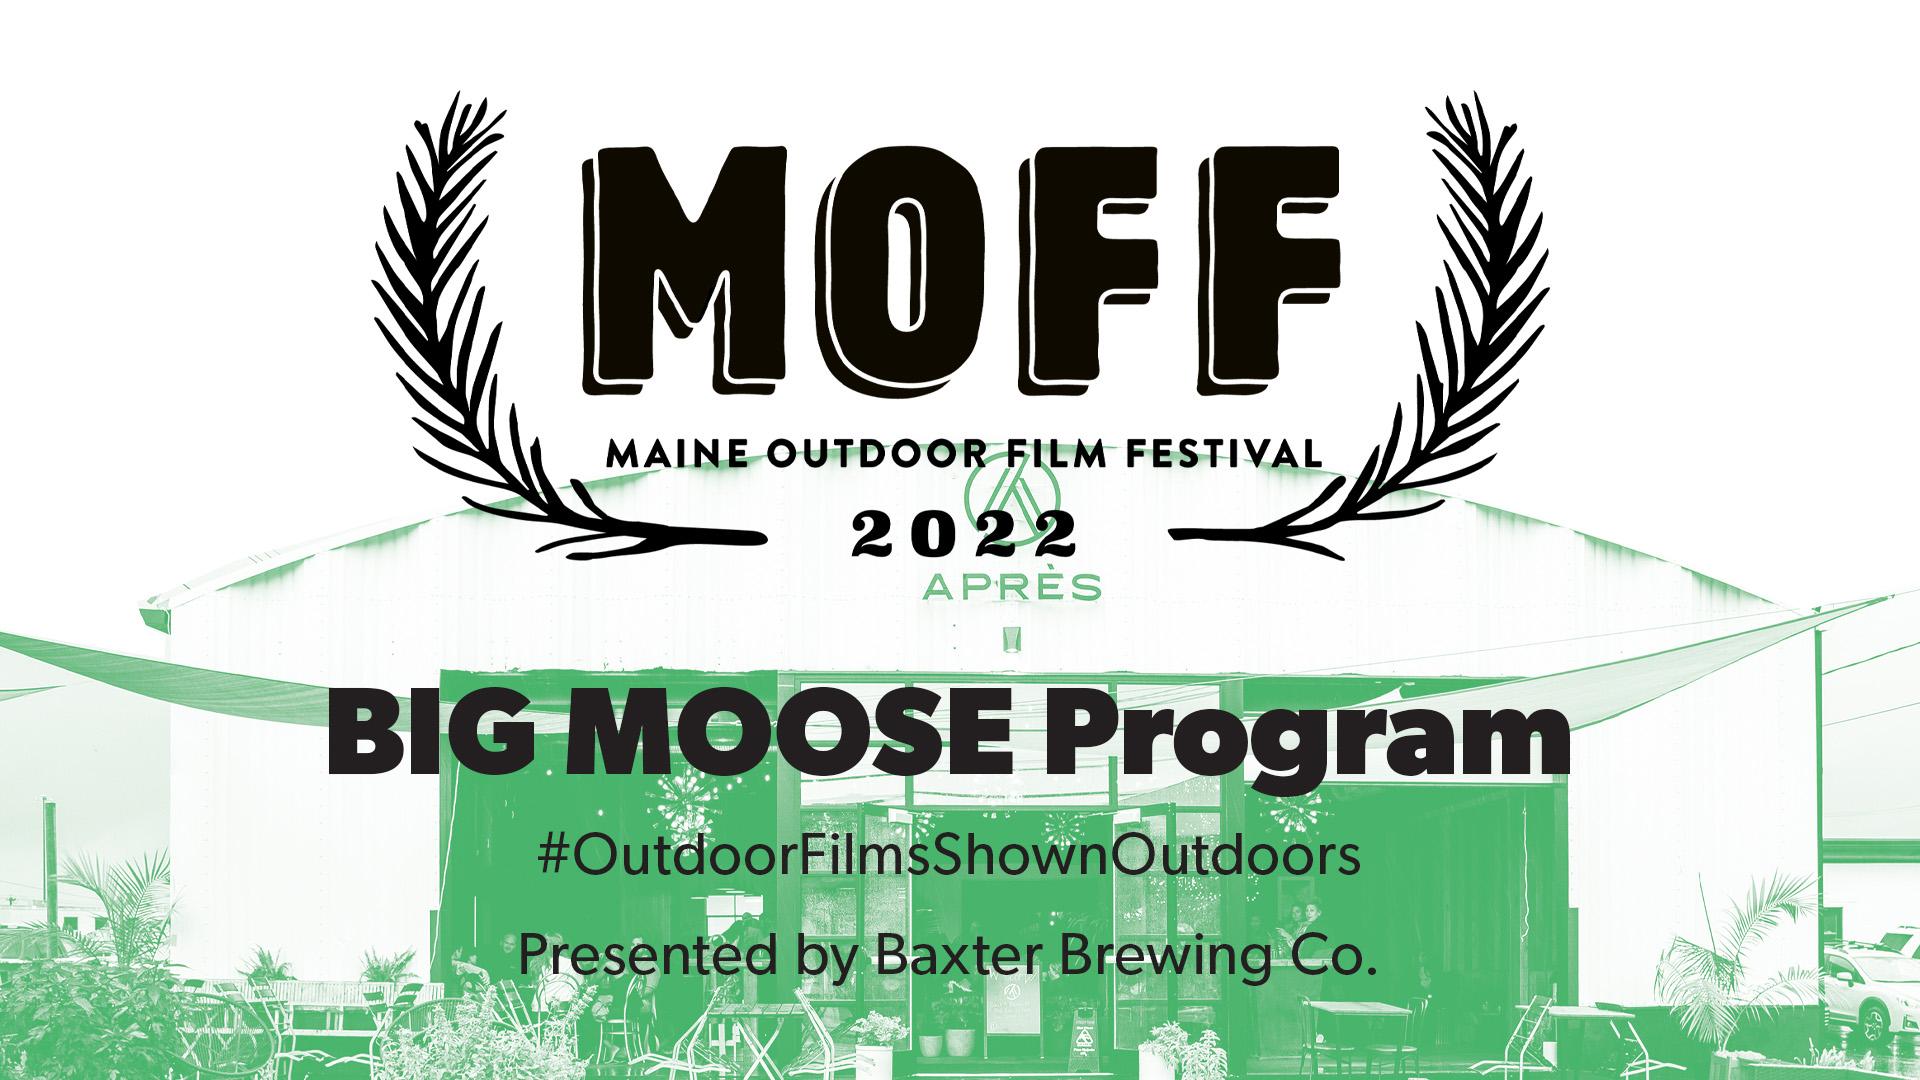 8/12 - The Big Moose Program